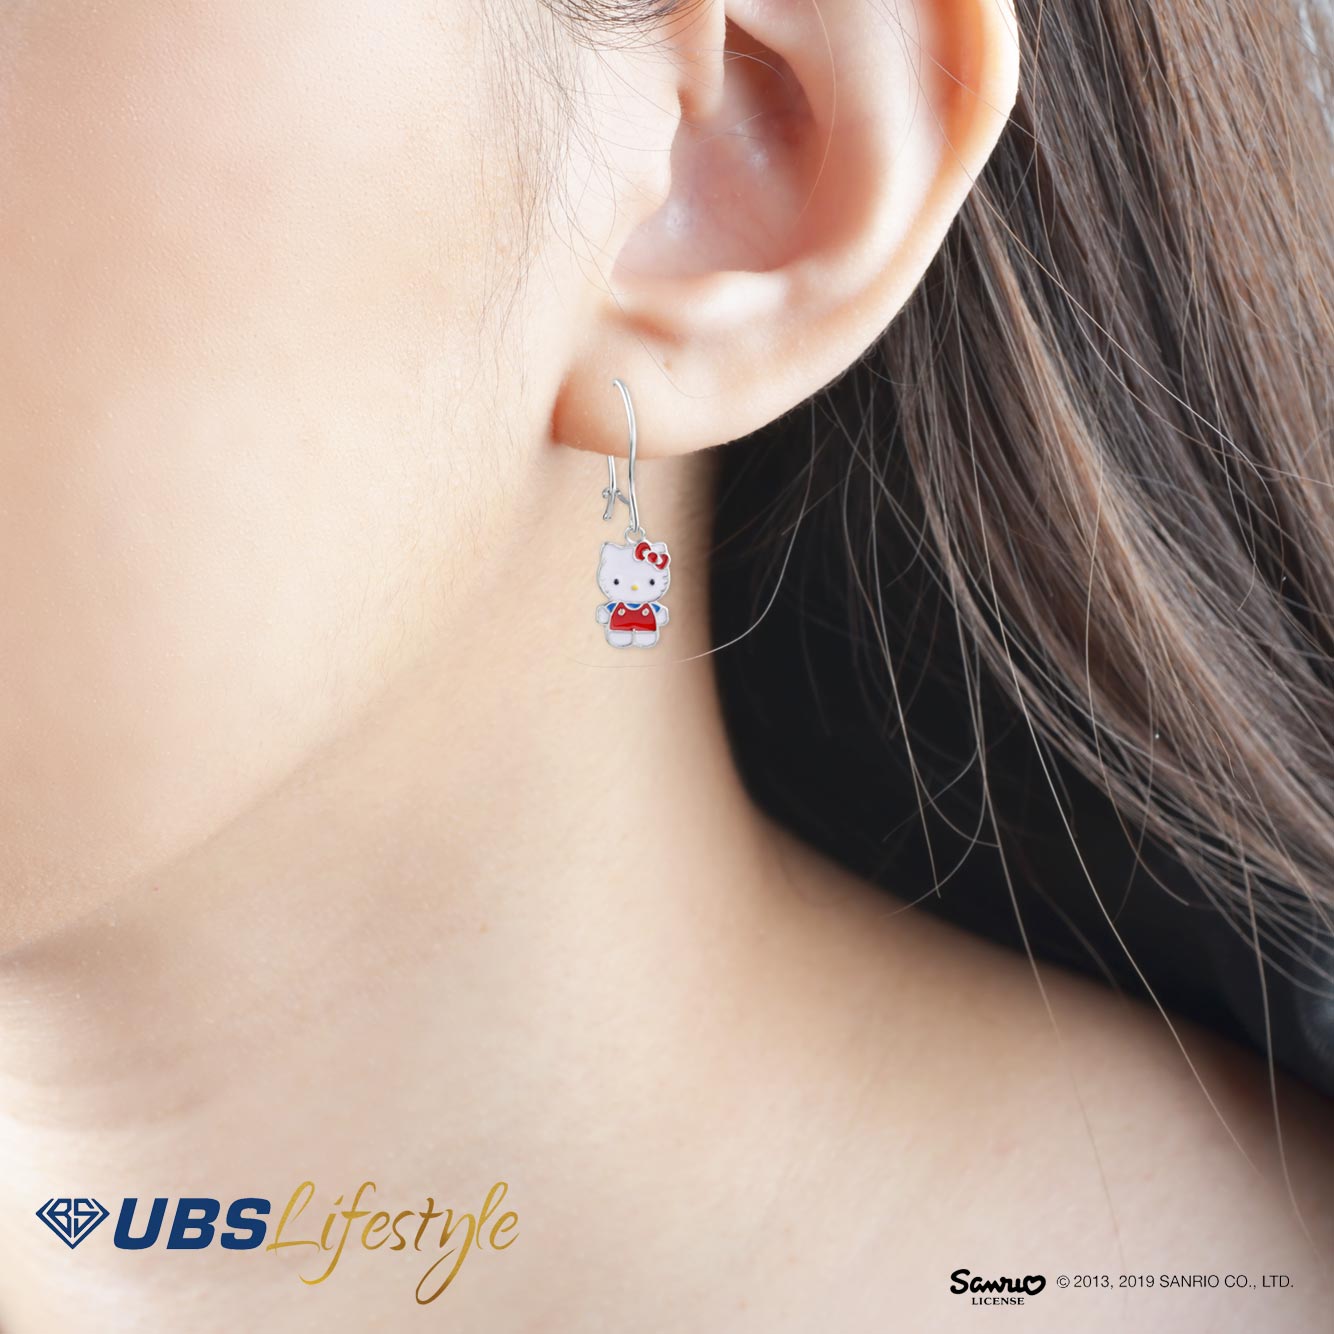 UBS Anting Emas Anak Sanrio Hello Kitty - Aaz0009 - 17K